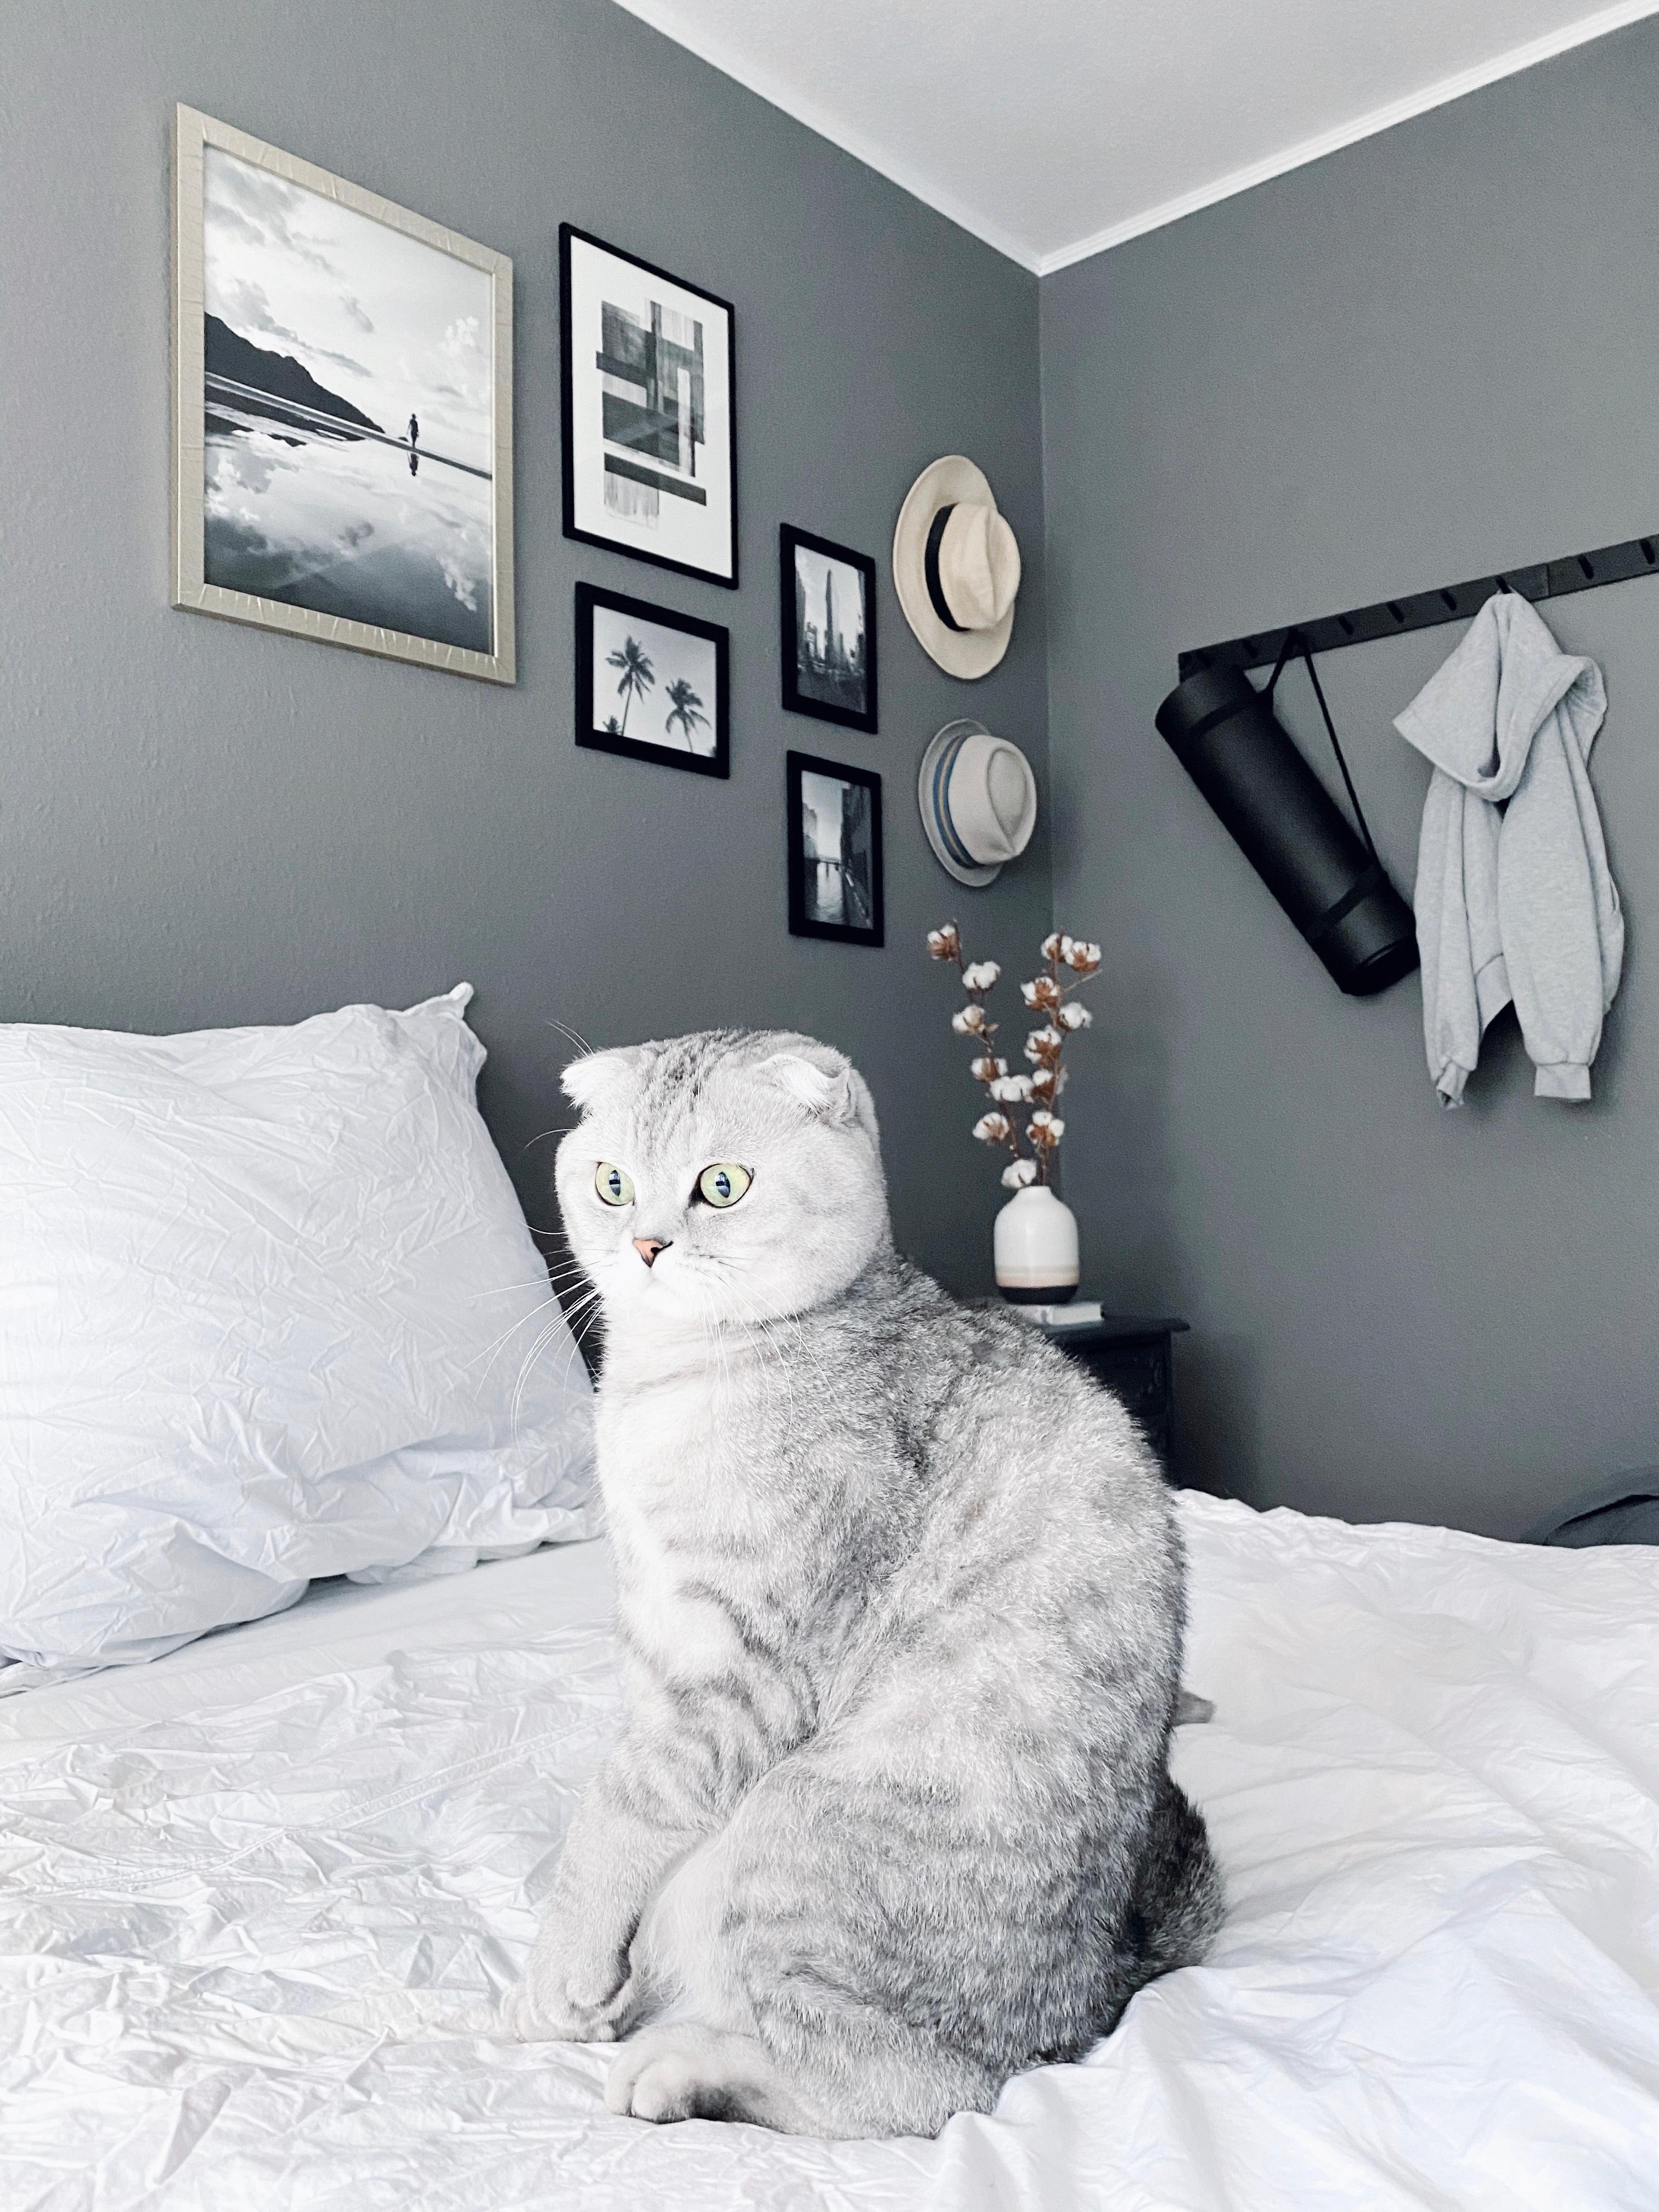 Happy Moter‘s Day! 🤍
#catmom #catlover #bedroom #nordichome #wallart #monochrome